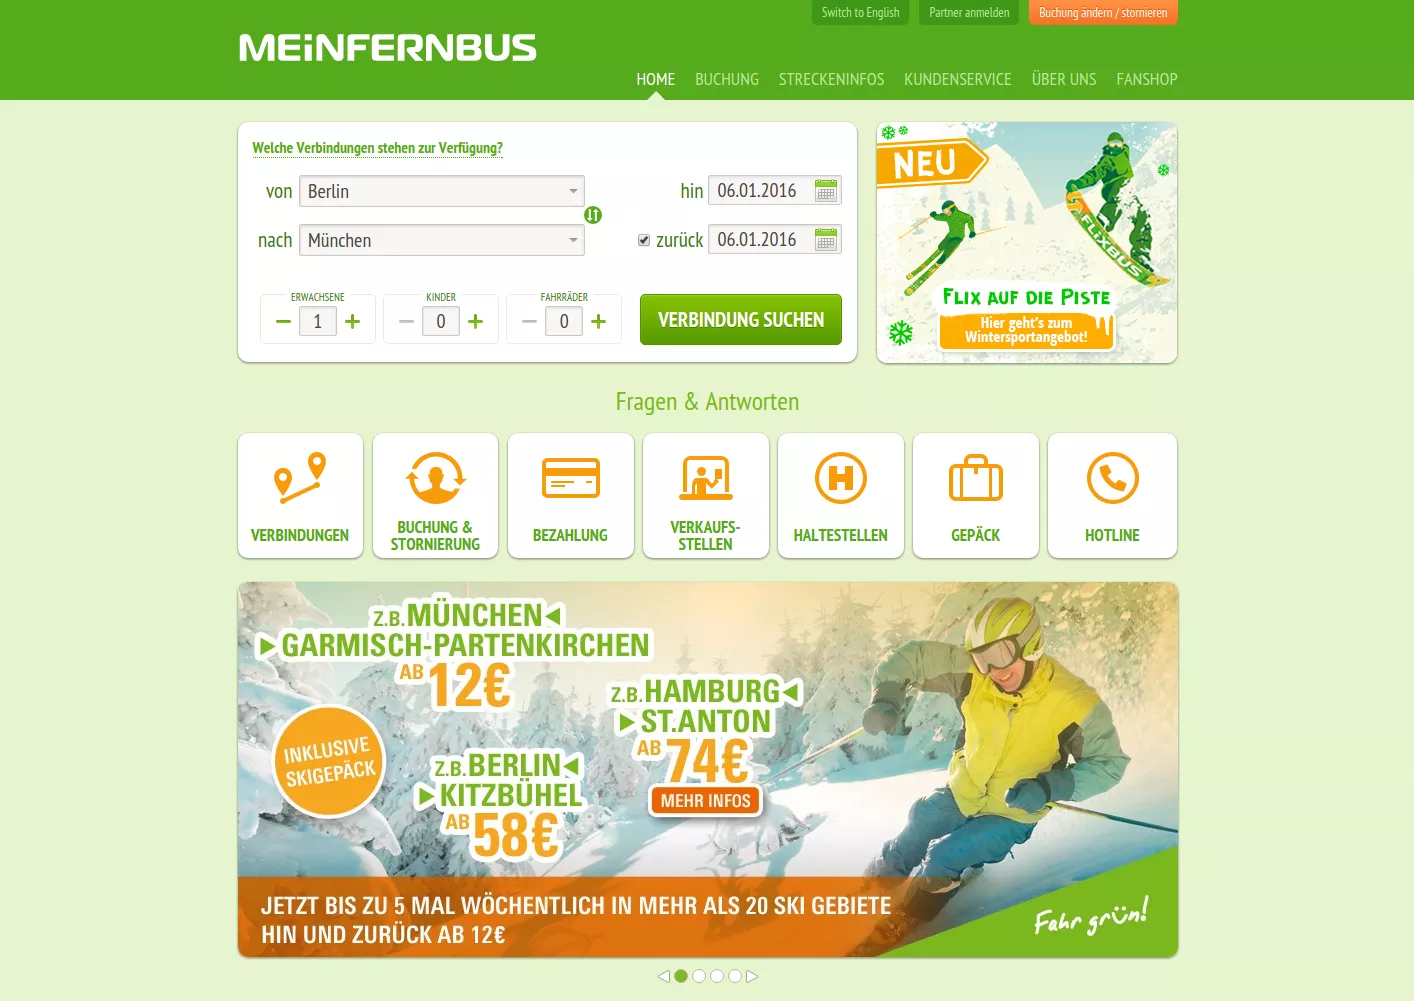 MeinFernbus transportation company website made with Symfony2